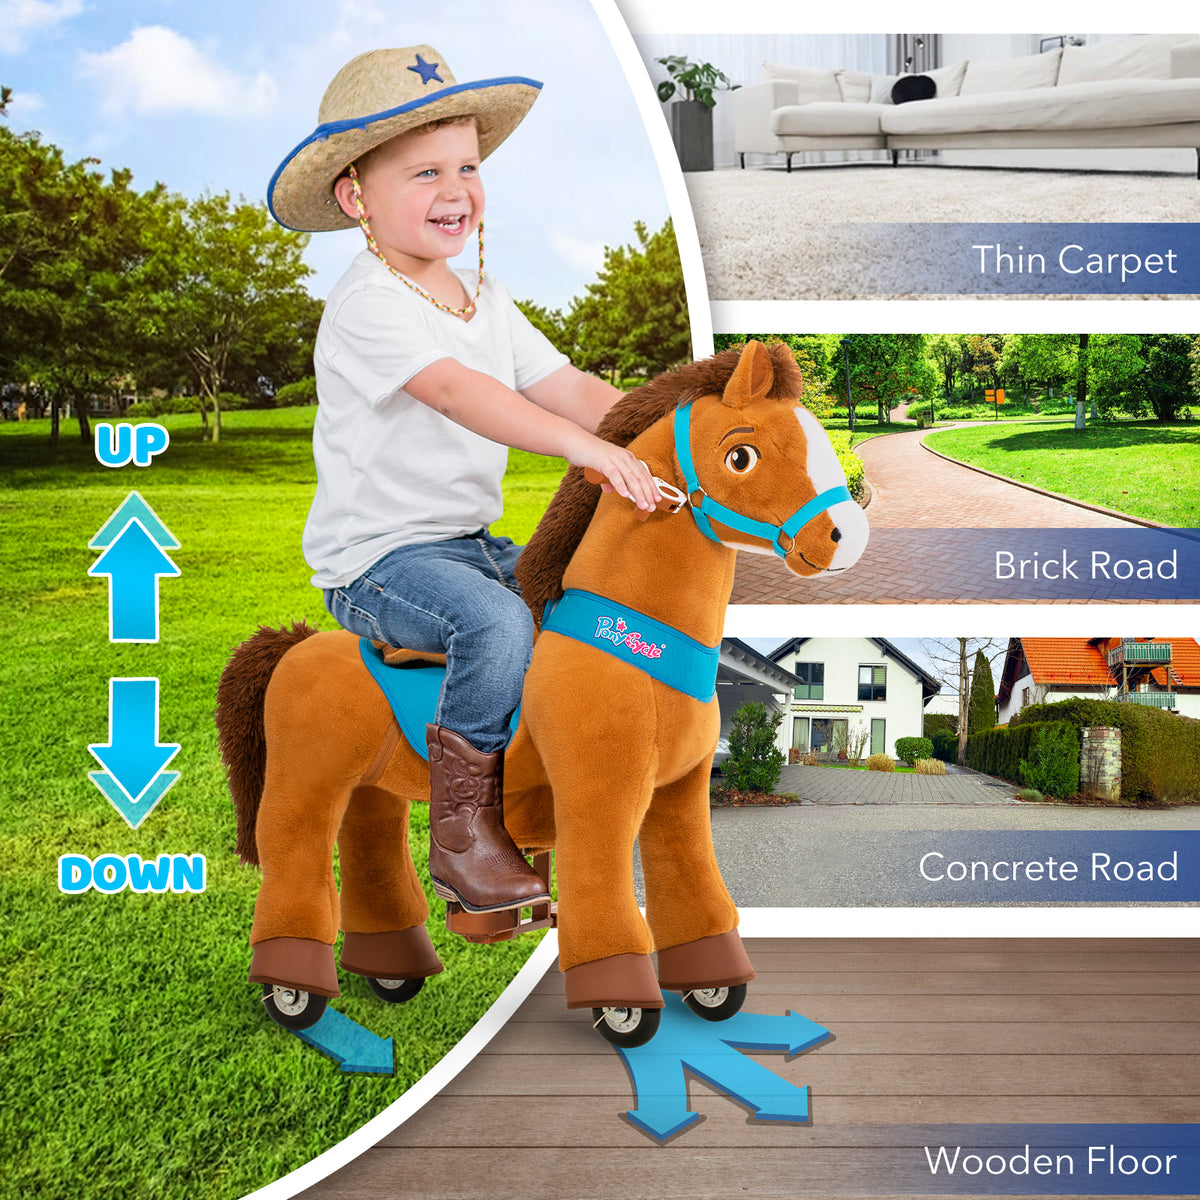 Model E Toy Horse Riding Age 4-8